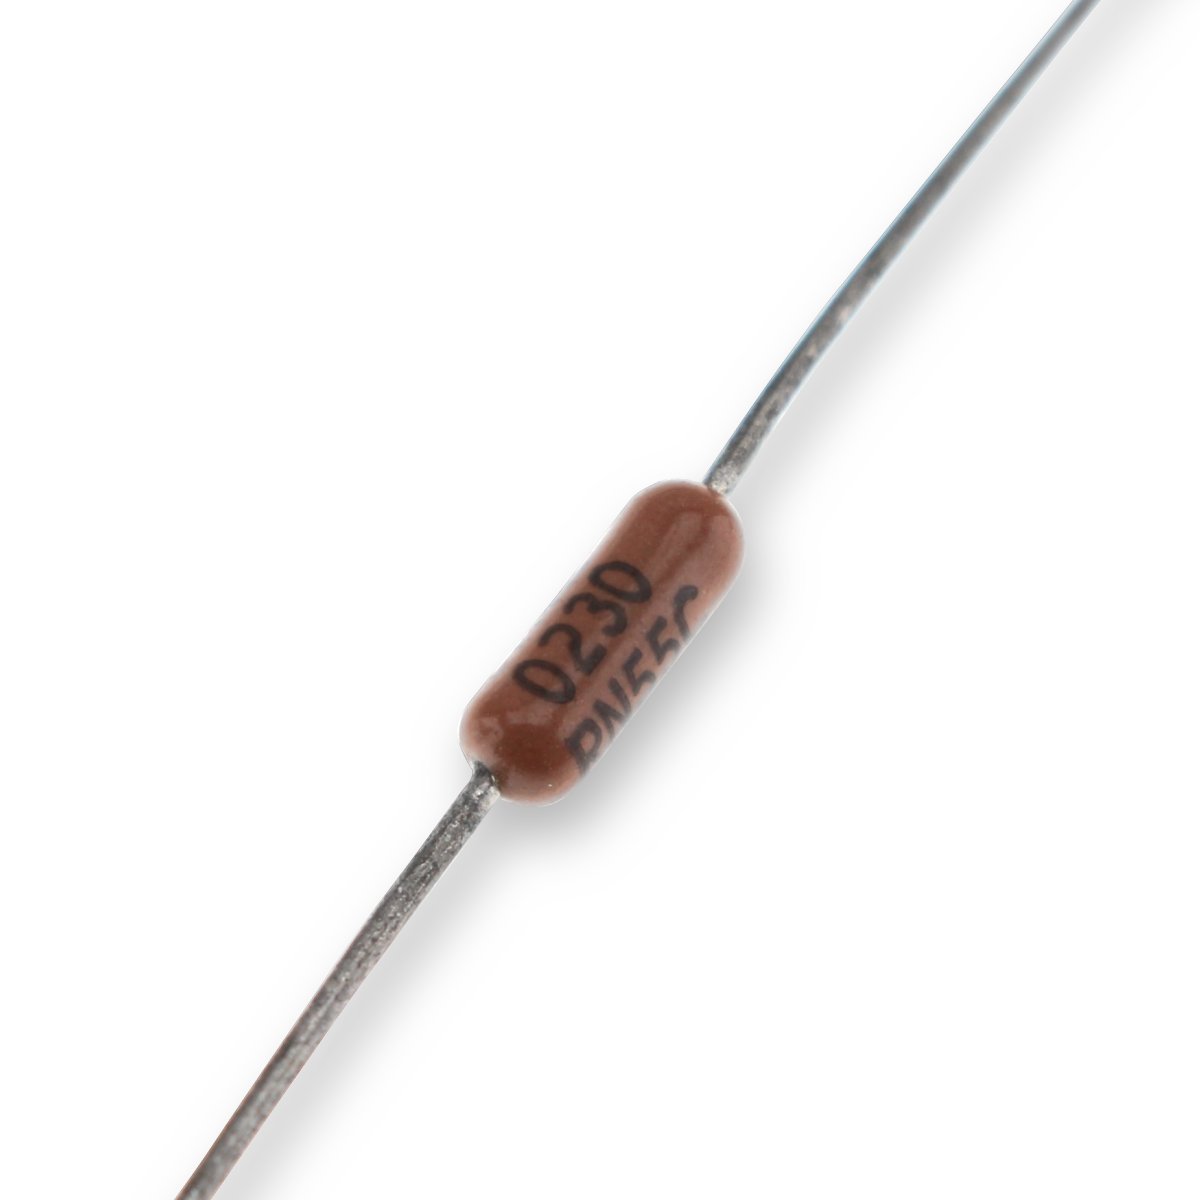 VISHAY DALE CMF55 Resistor 1% 50ppm 20.0 Ohm